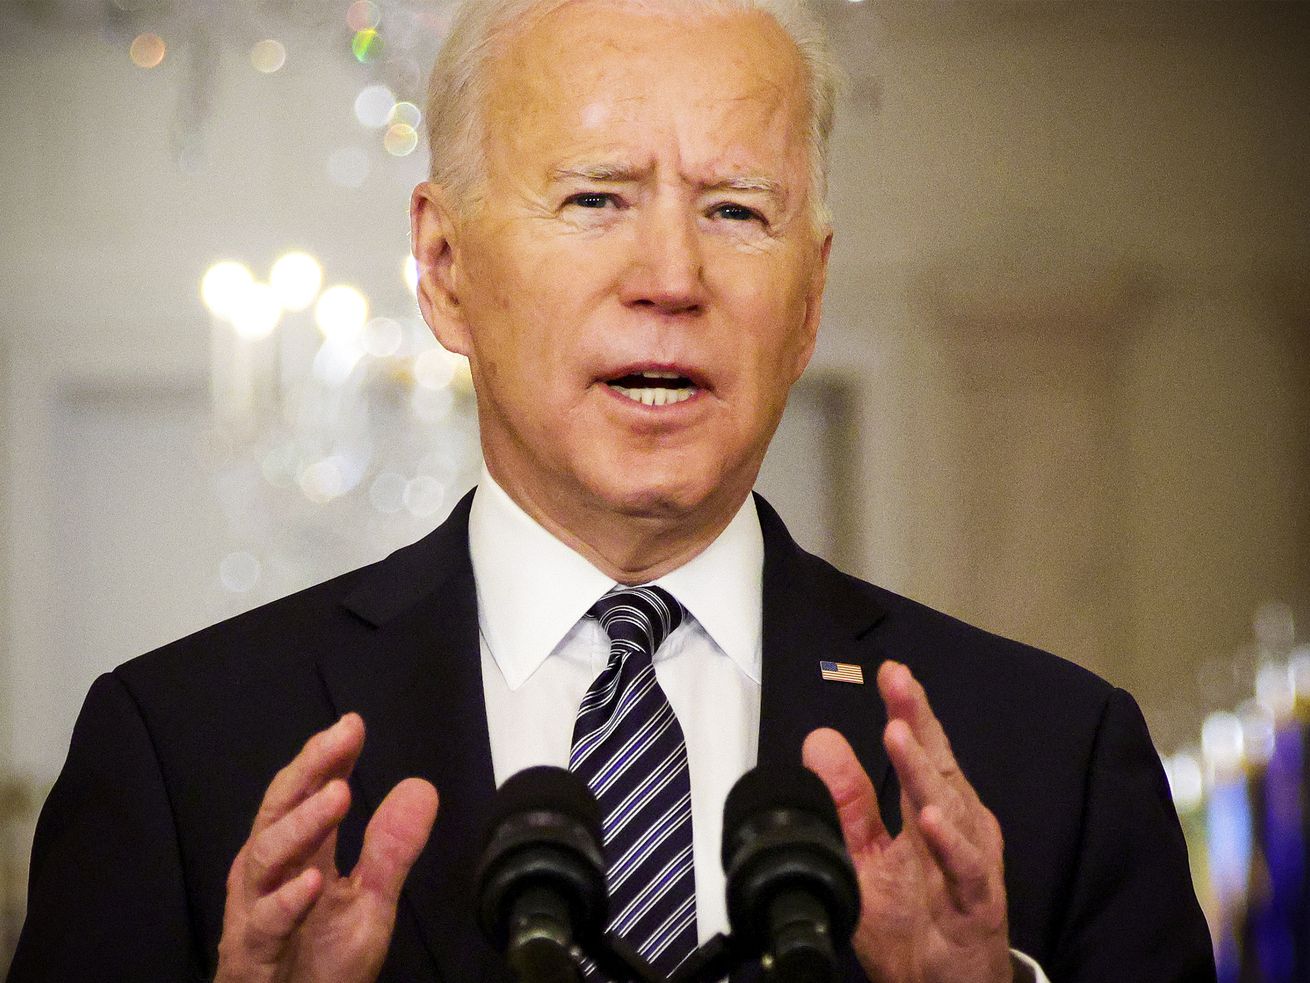 “It’s un-American. And it must stop”: Biden denounces anti-Asian racism